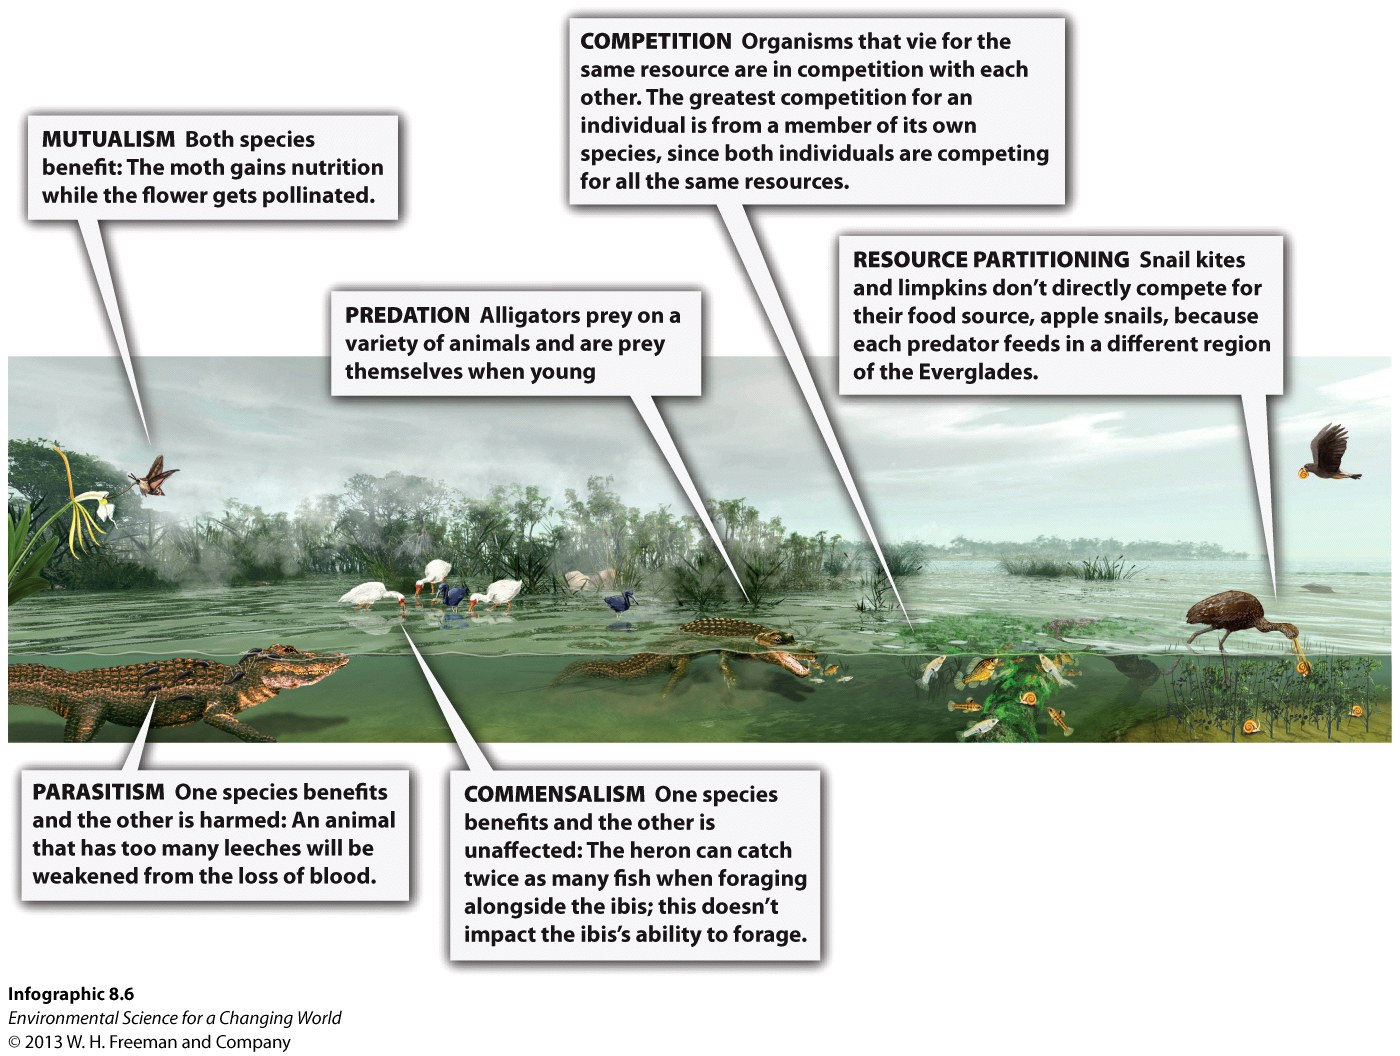 Infographic 8.6: Species Interactions